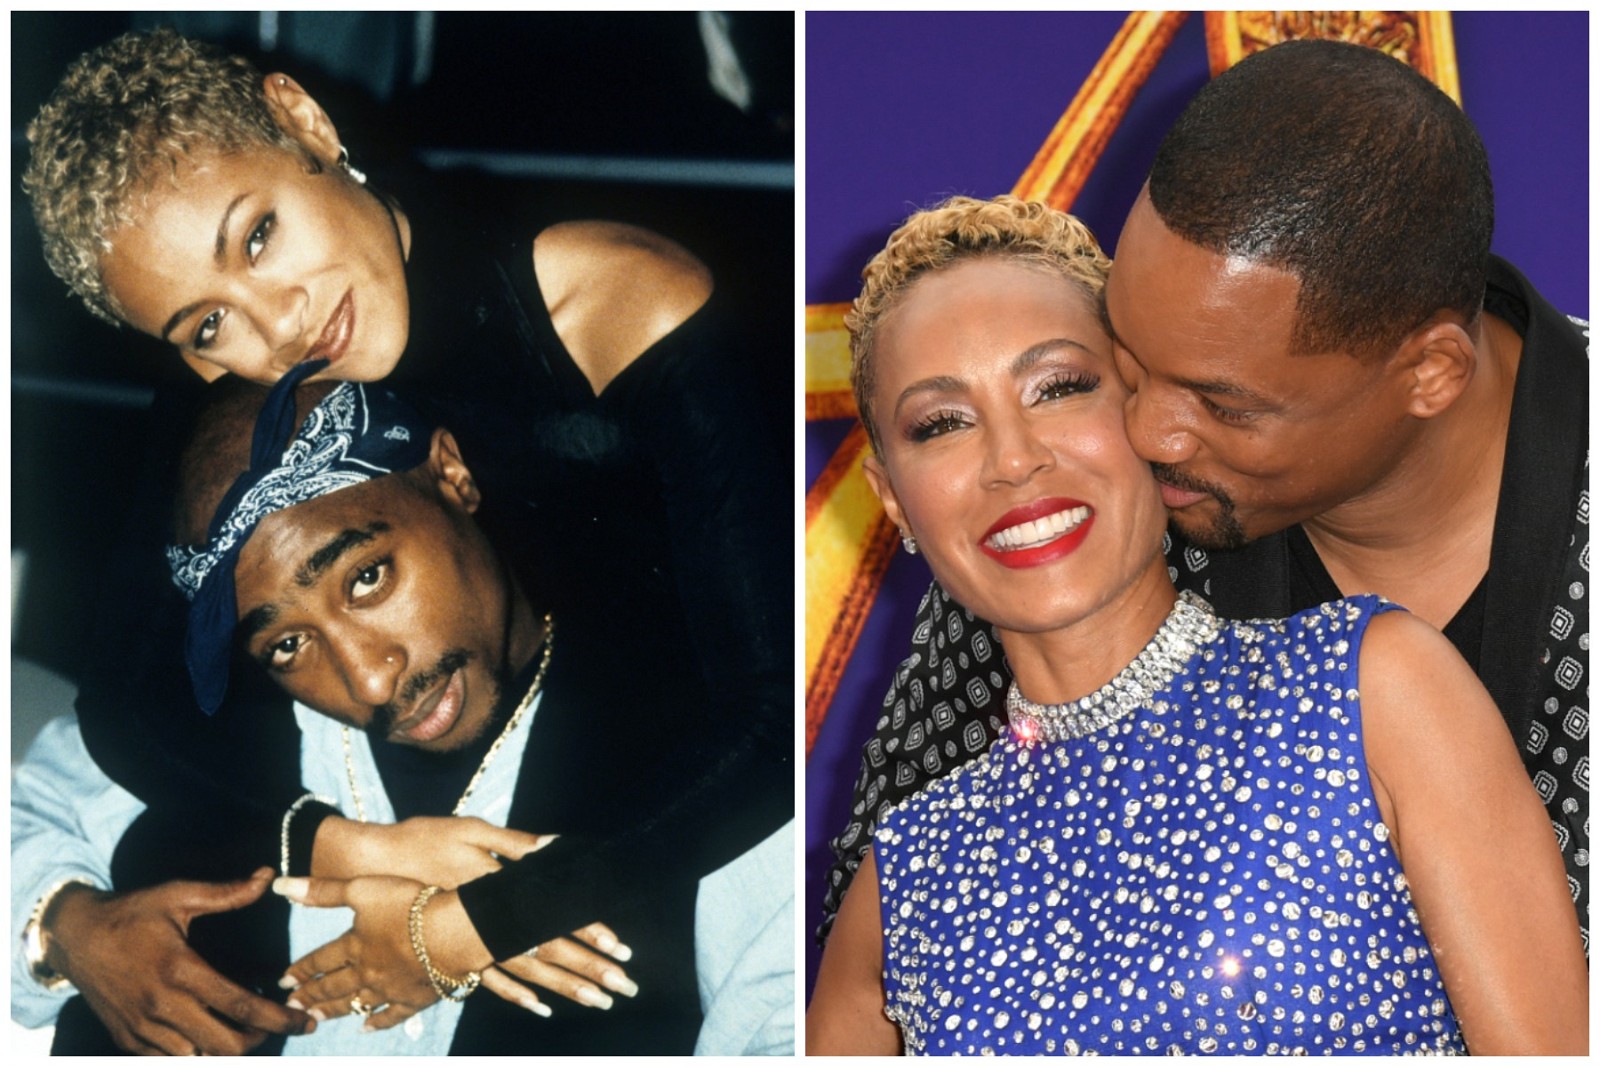 Will Smith was jealous of rapper Tupac Shakur over Jada Pinkett Smith